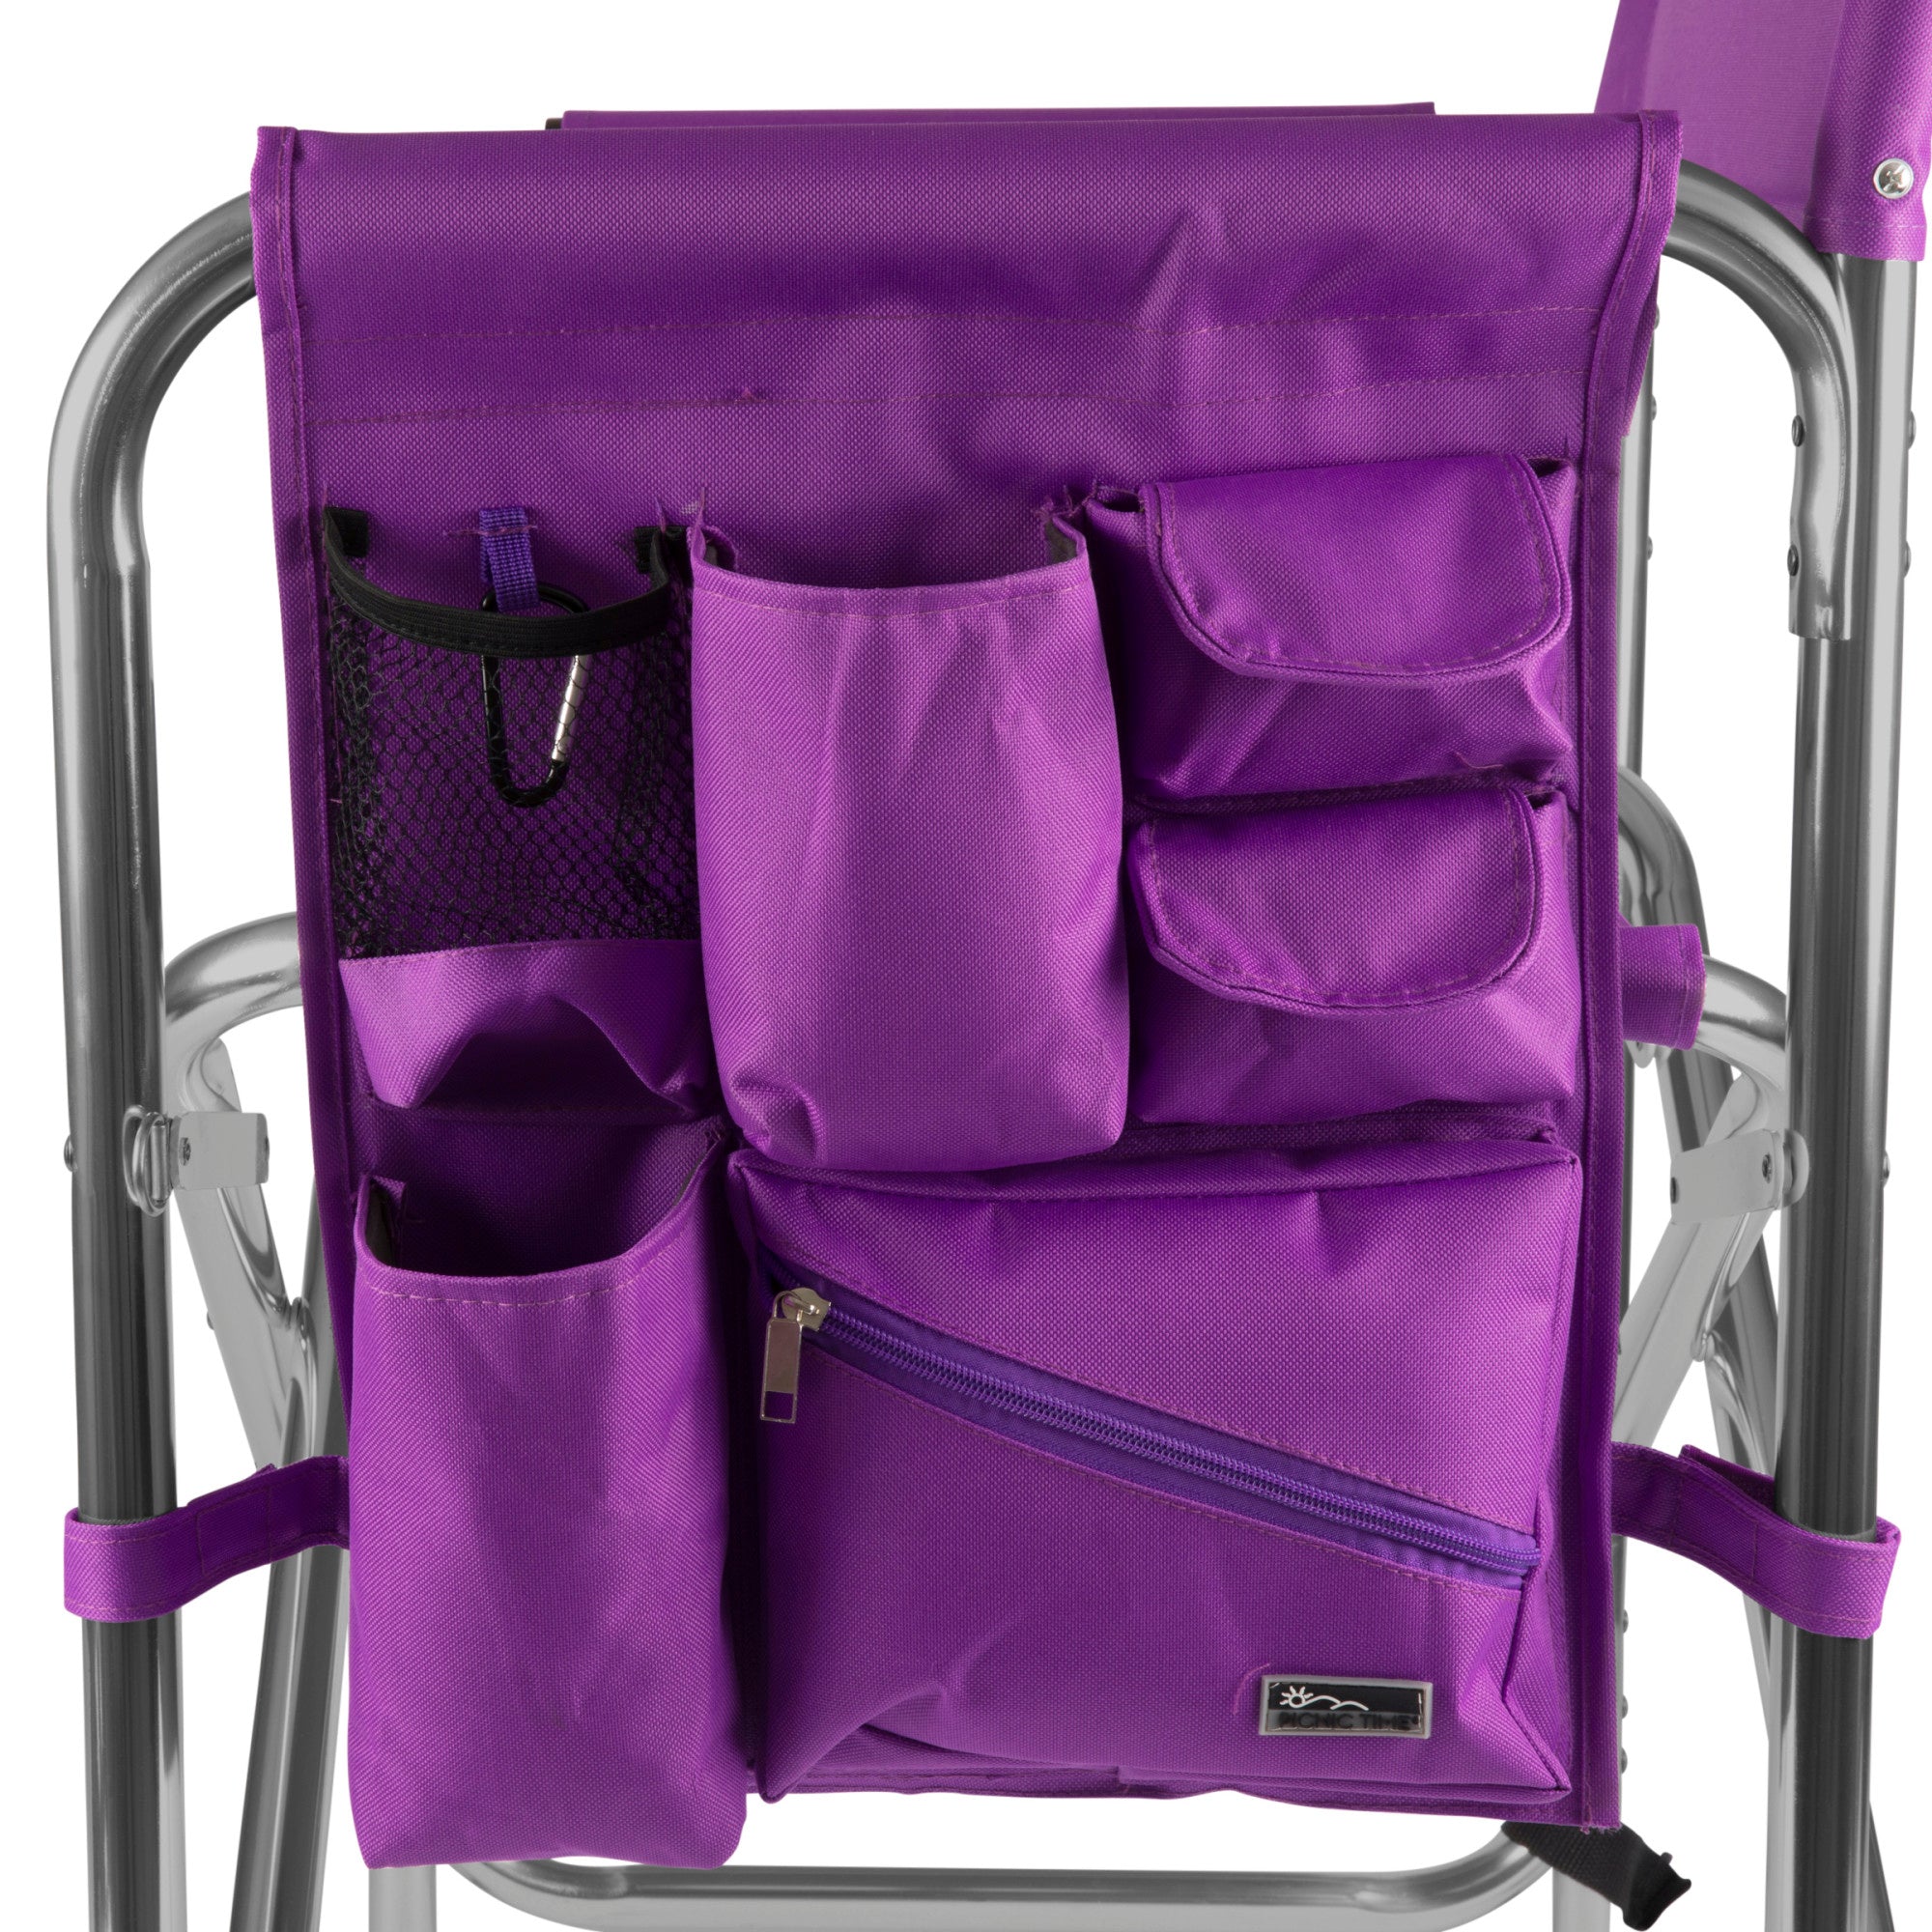 Walking Aid Wheelchair Armrest Side Storage Bag Car Storage Hanging Bag (Purple)